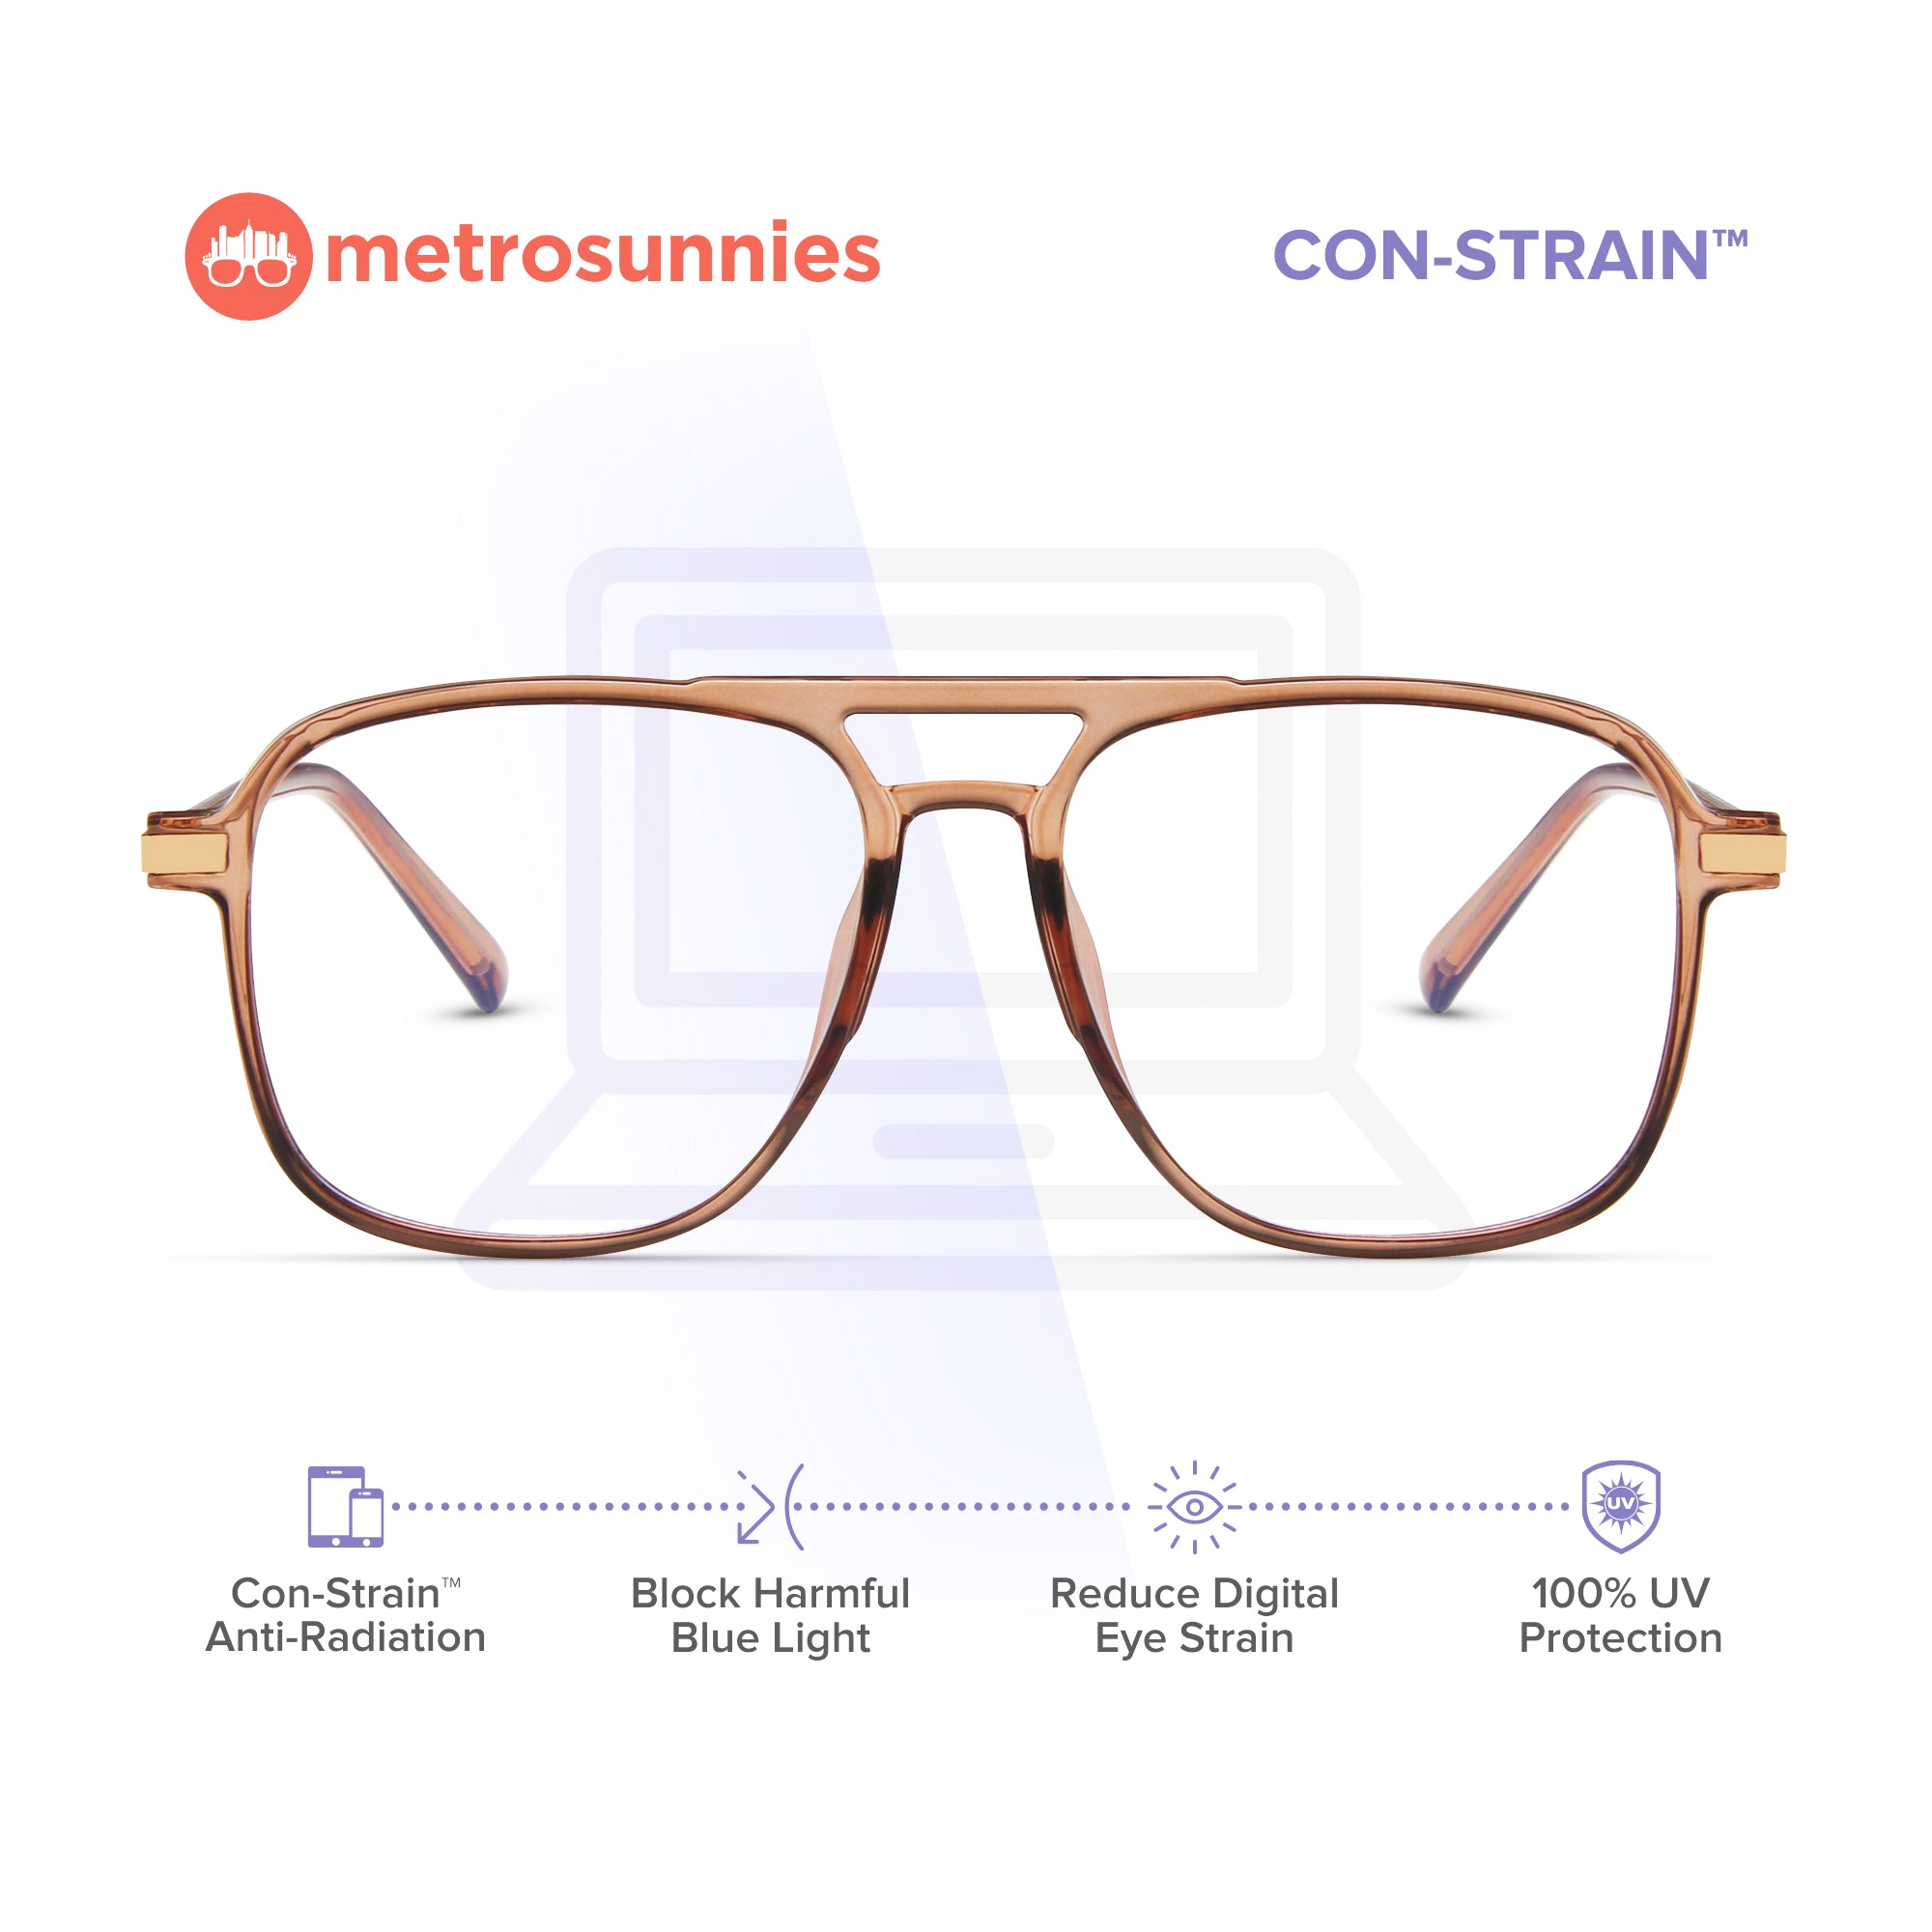 MetroSunnies Paul Specs (Champagne) / Con-Strain Blue Light / Versairy / Anti-Radiation Eyeglasses